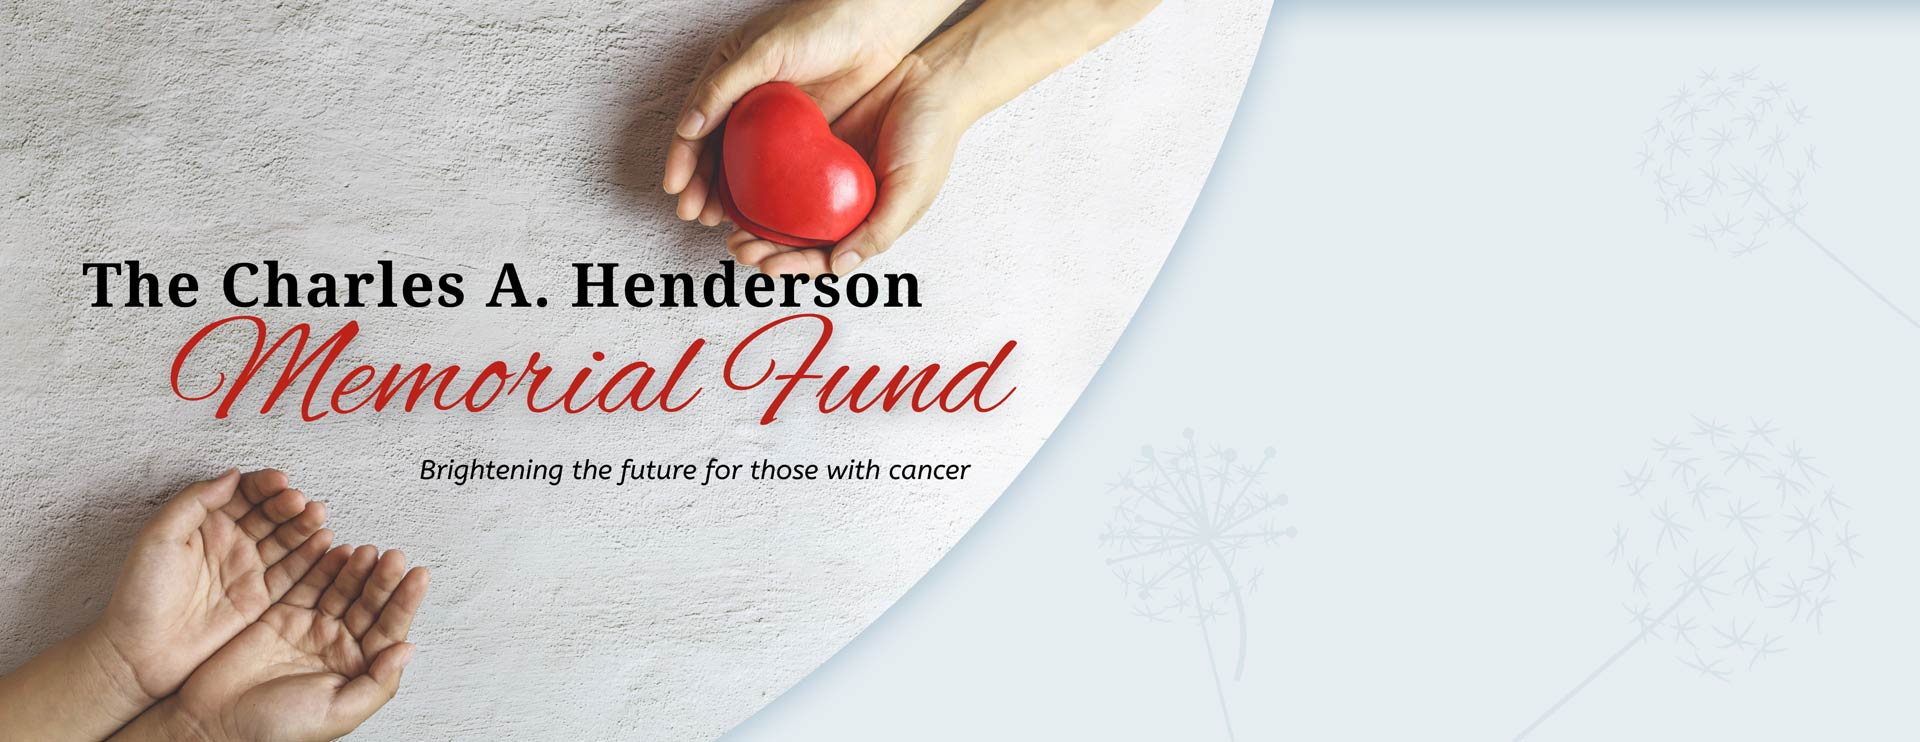 Charles A. Henderson Memorial Fund